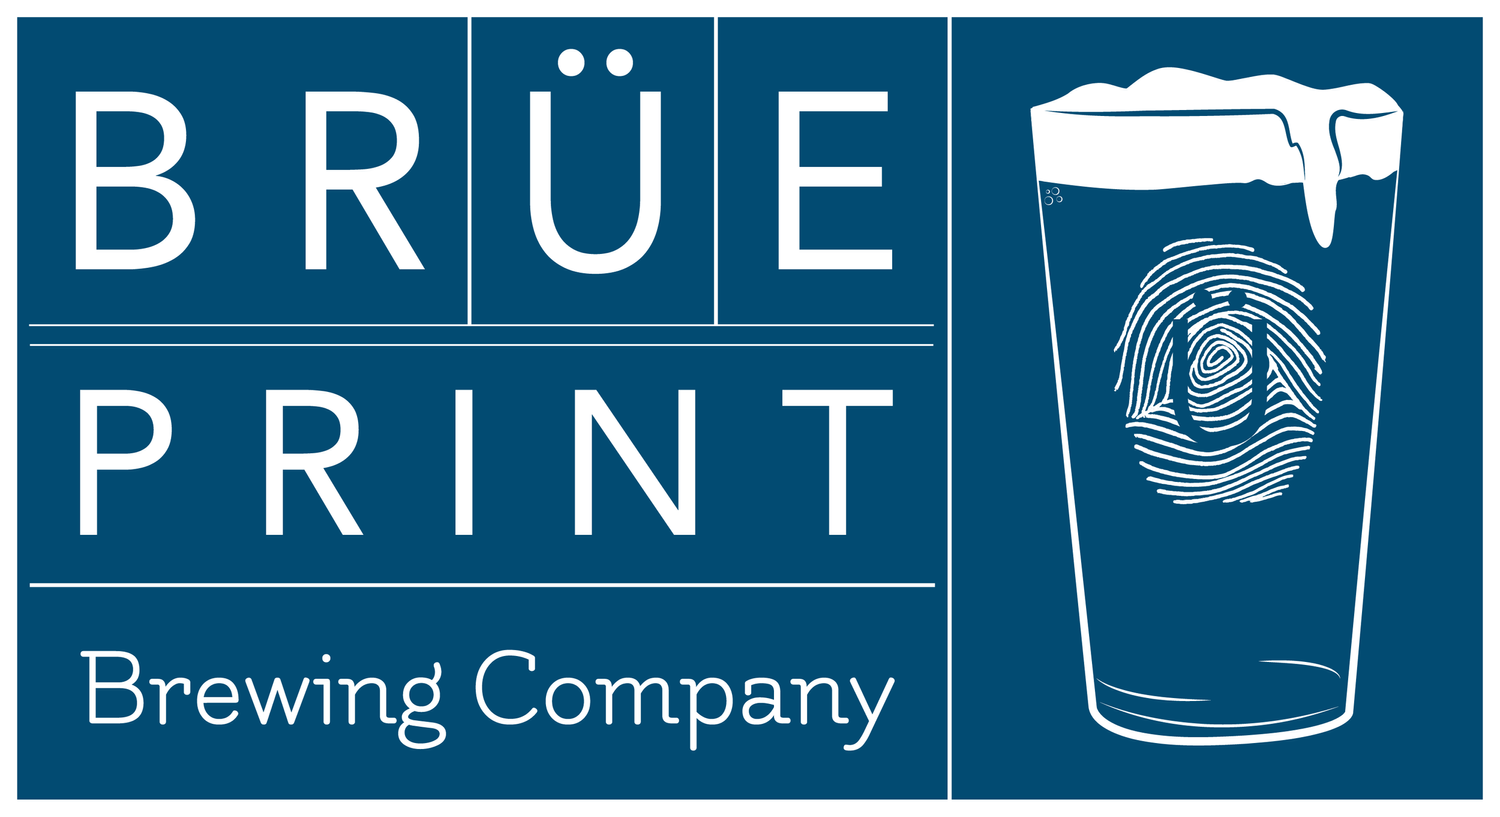 Brüeprint Brewing Company